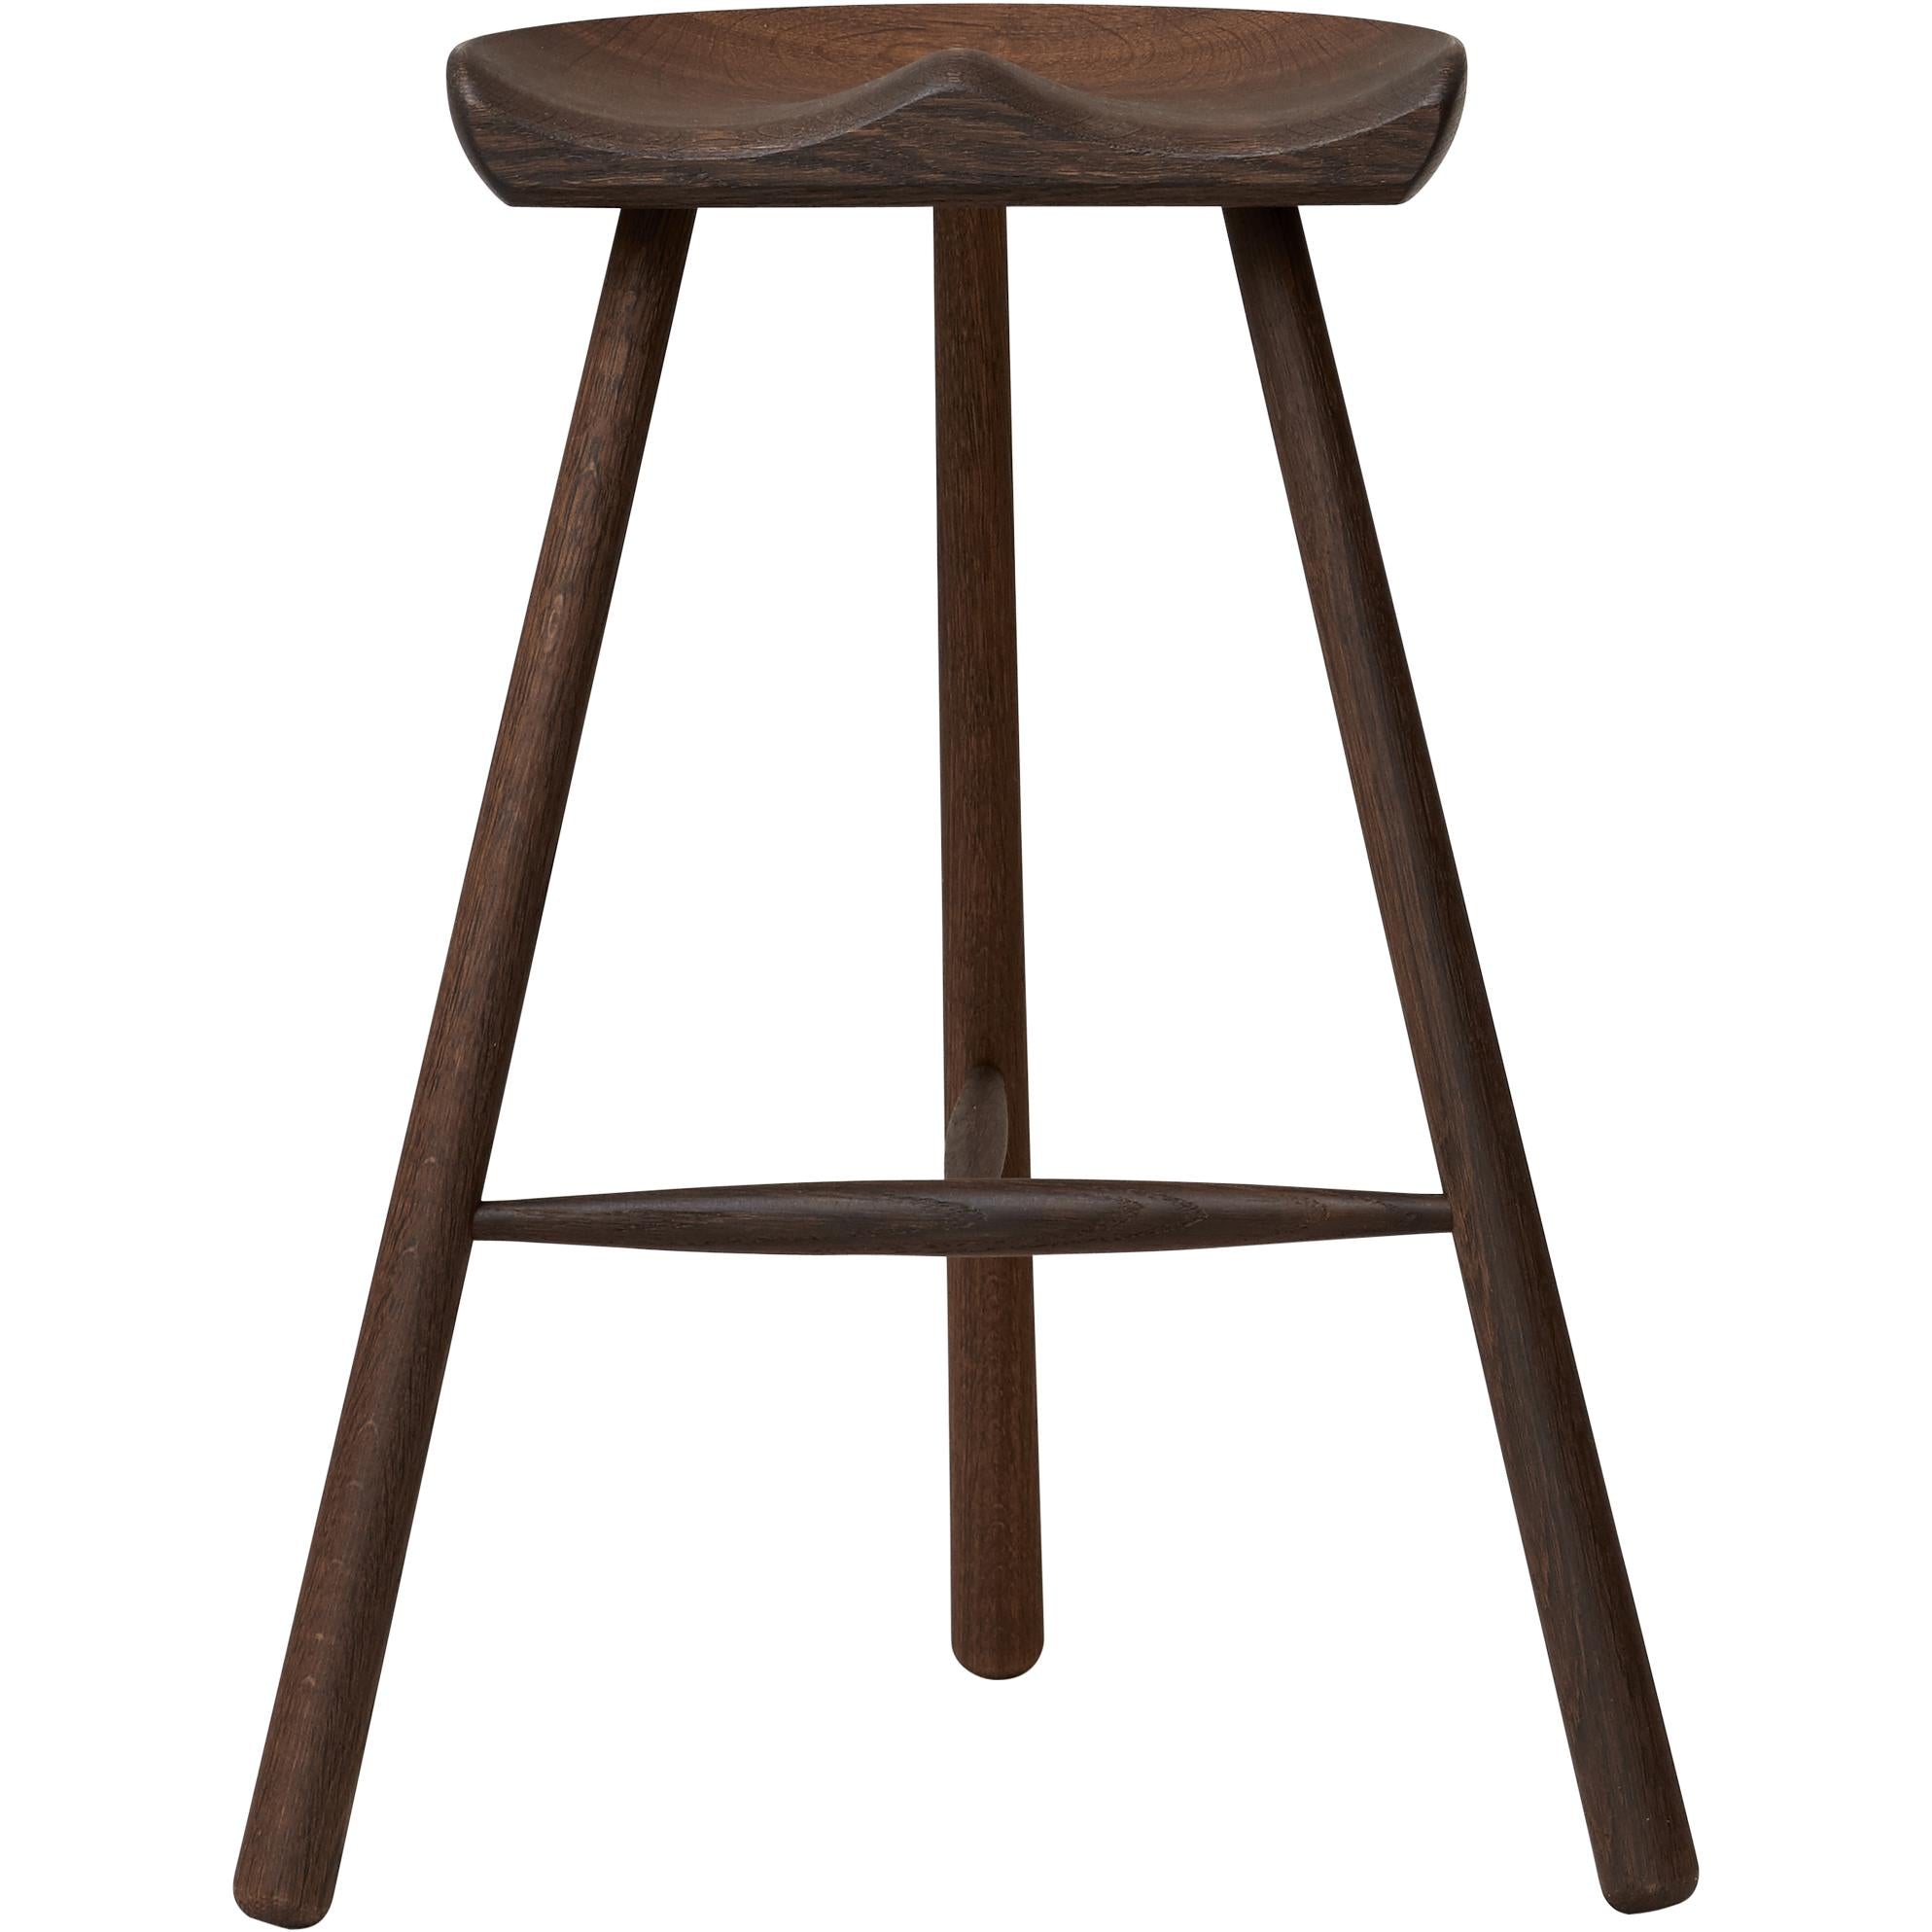 Form & Refine Shoemaker Chair No. 68. Smoked Oak